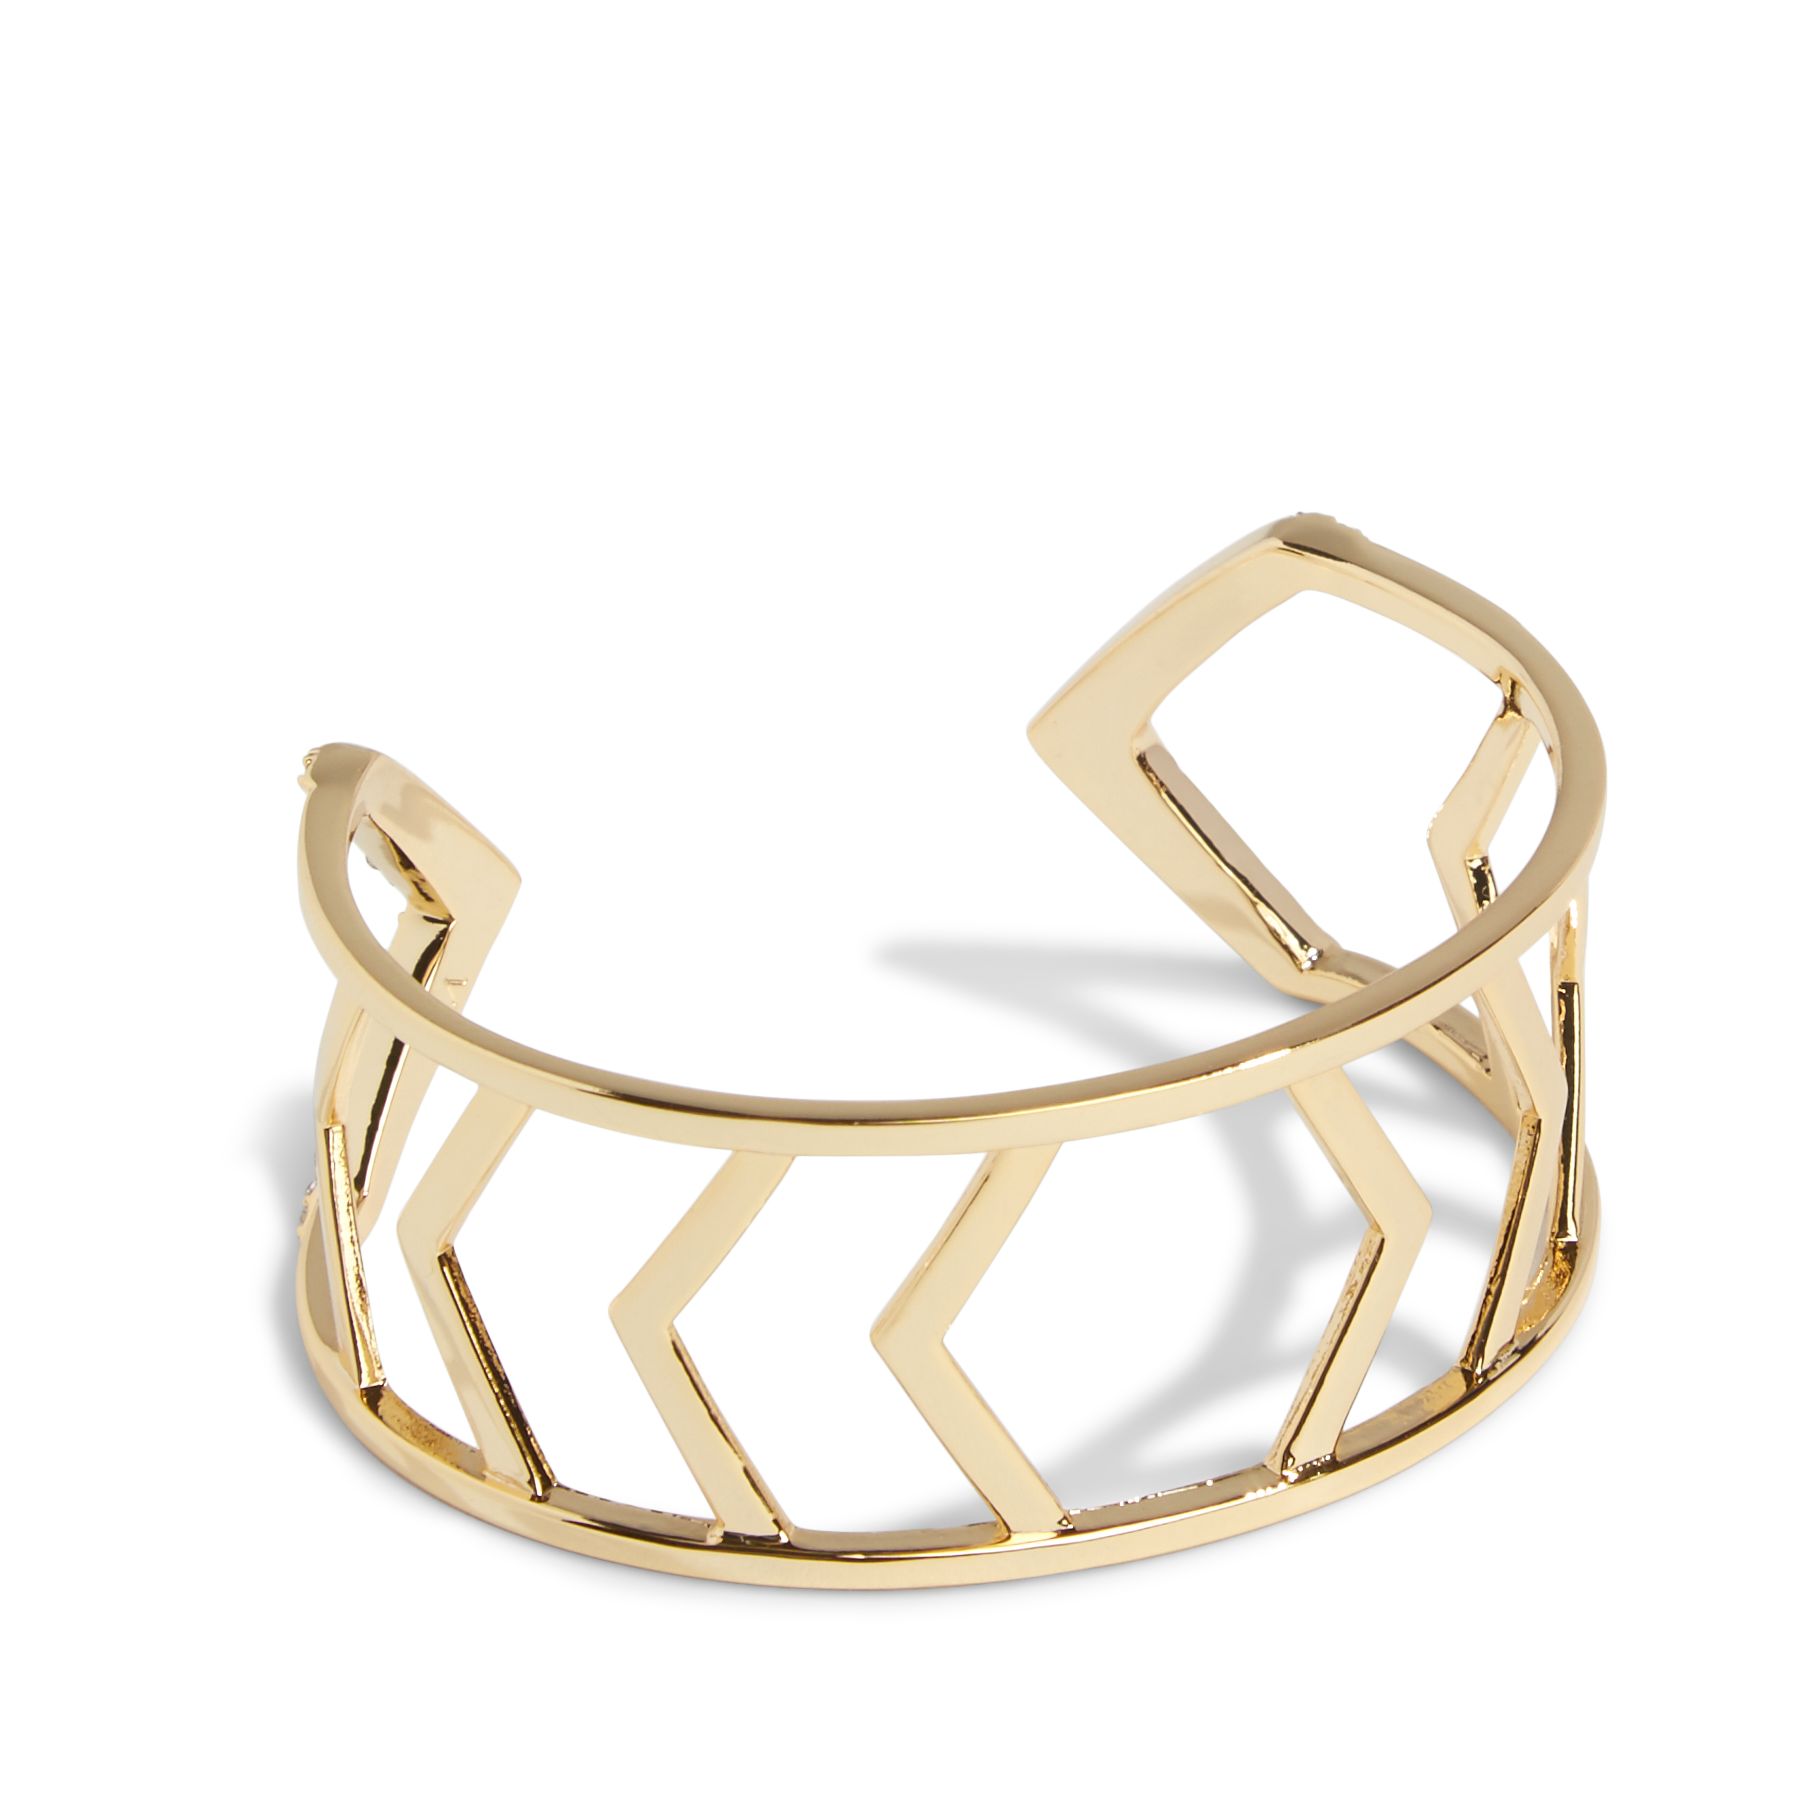 Vera Bradley Triangle Cuff Bracelet in Gold ToneBracelets